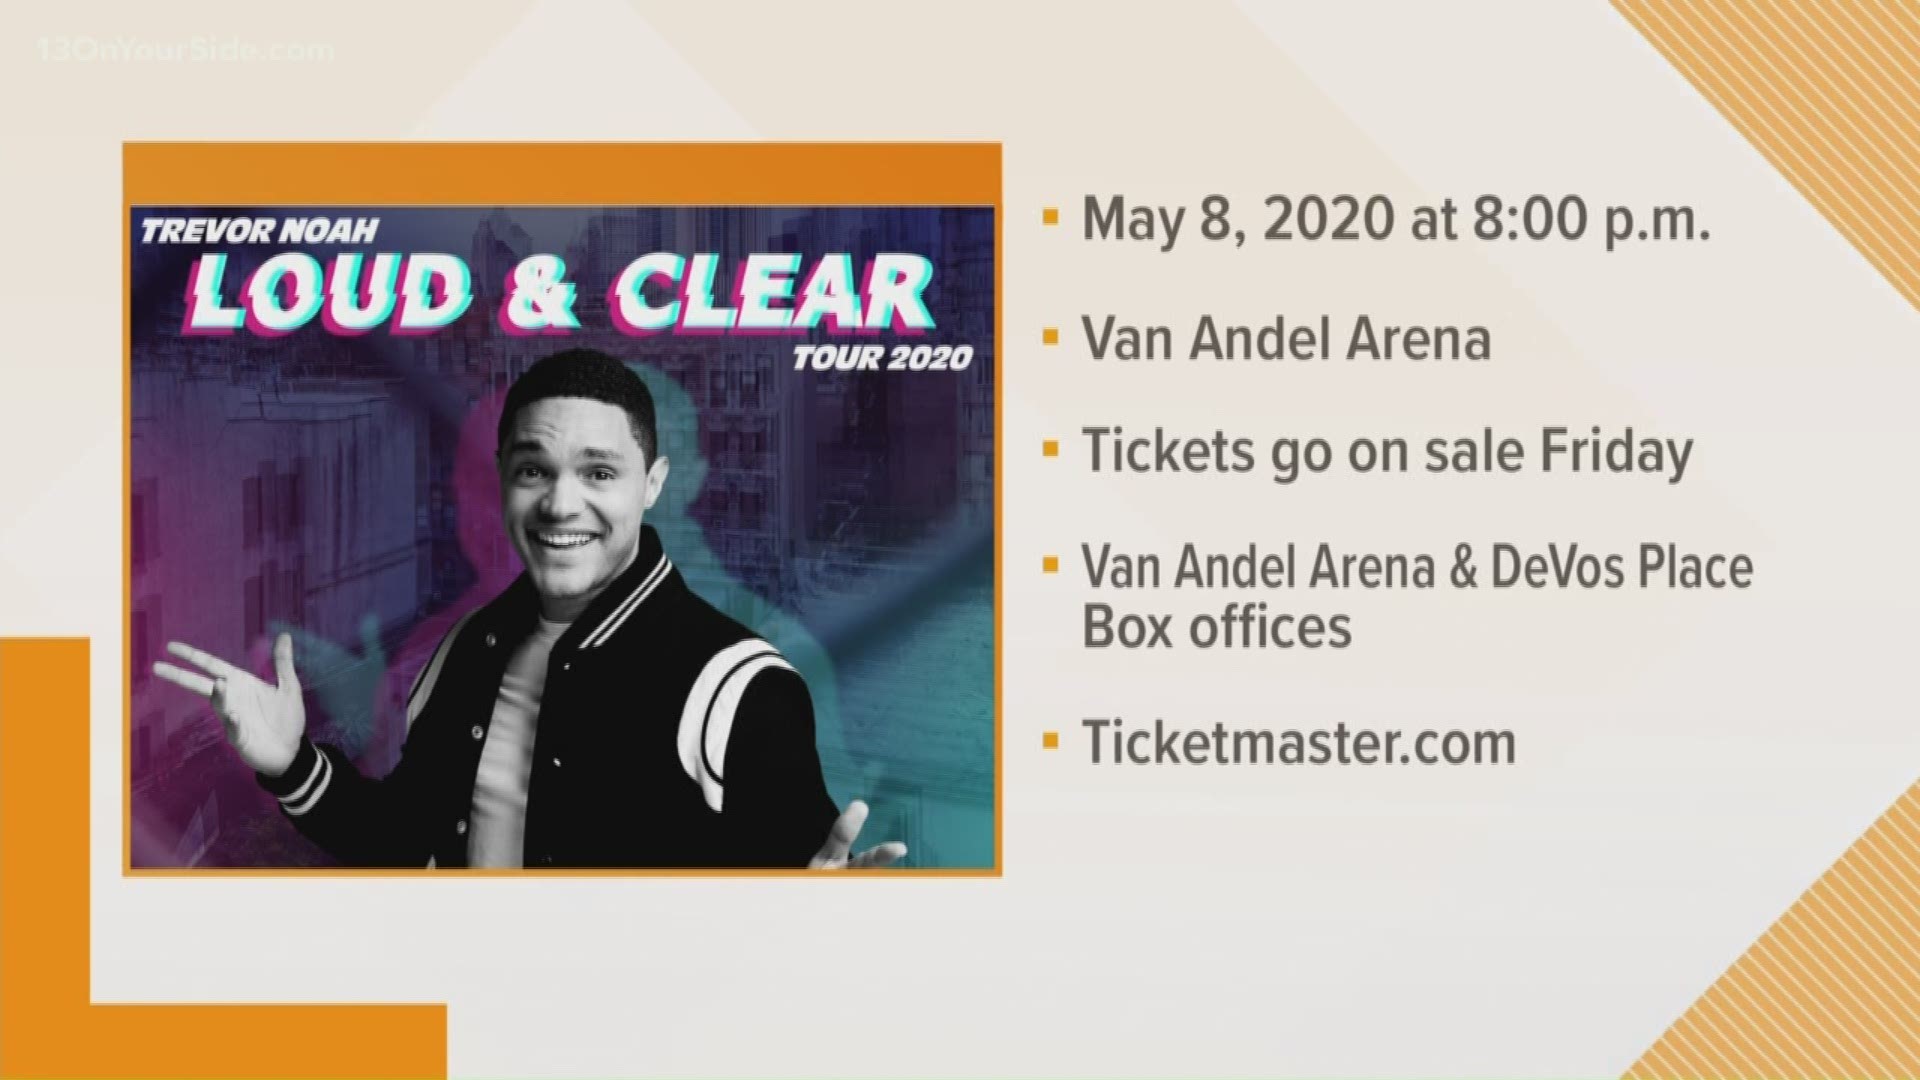 Trevor Noah will preform on Friday, May 8, 2020 at 8 p.m. at Van Andel Arena.